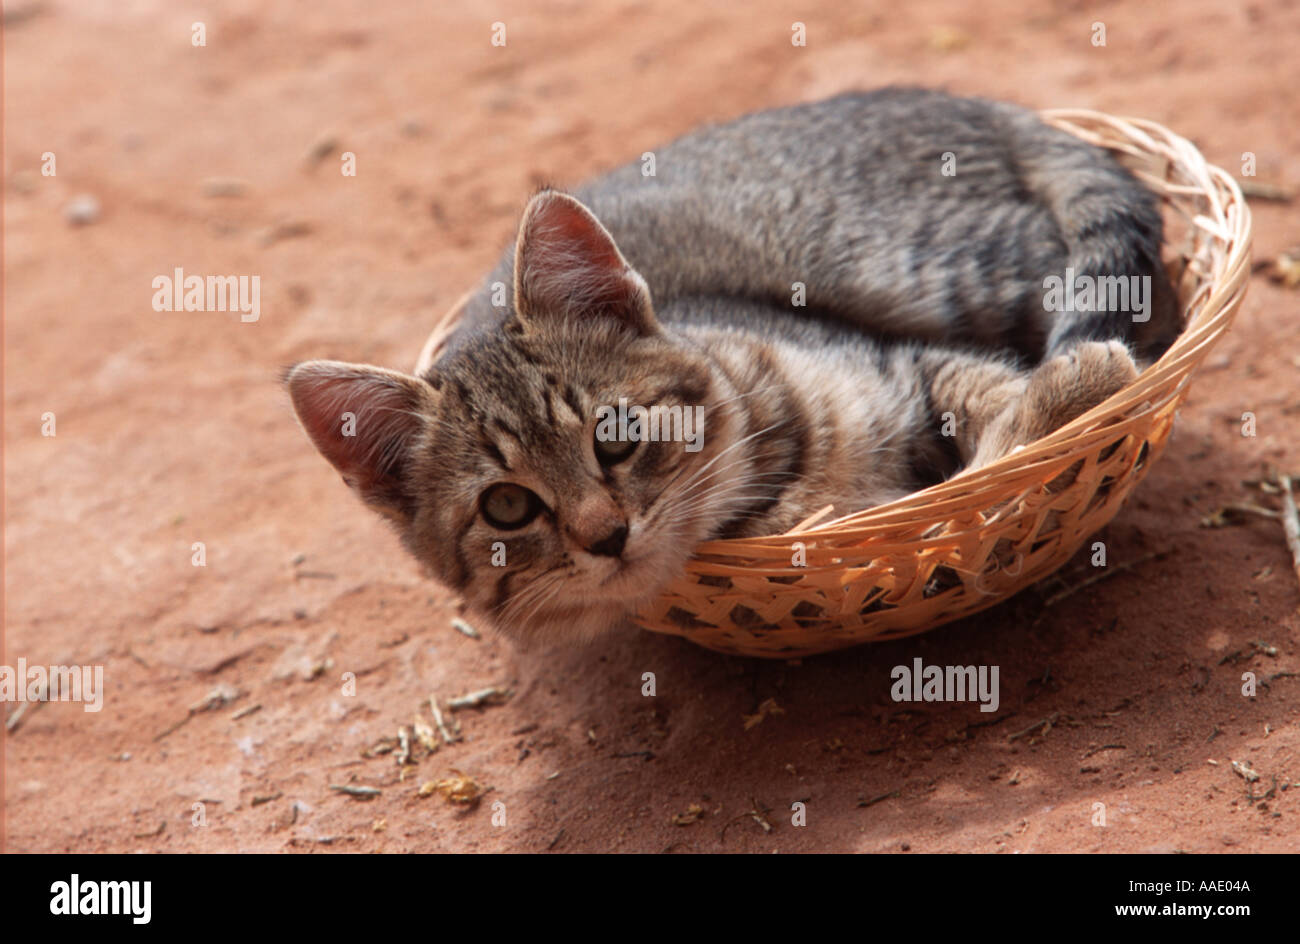 A kitten curls up in a woven basket Stock Photo